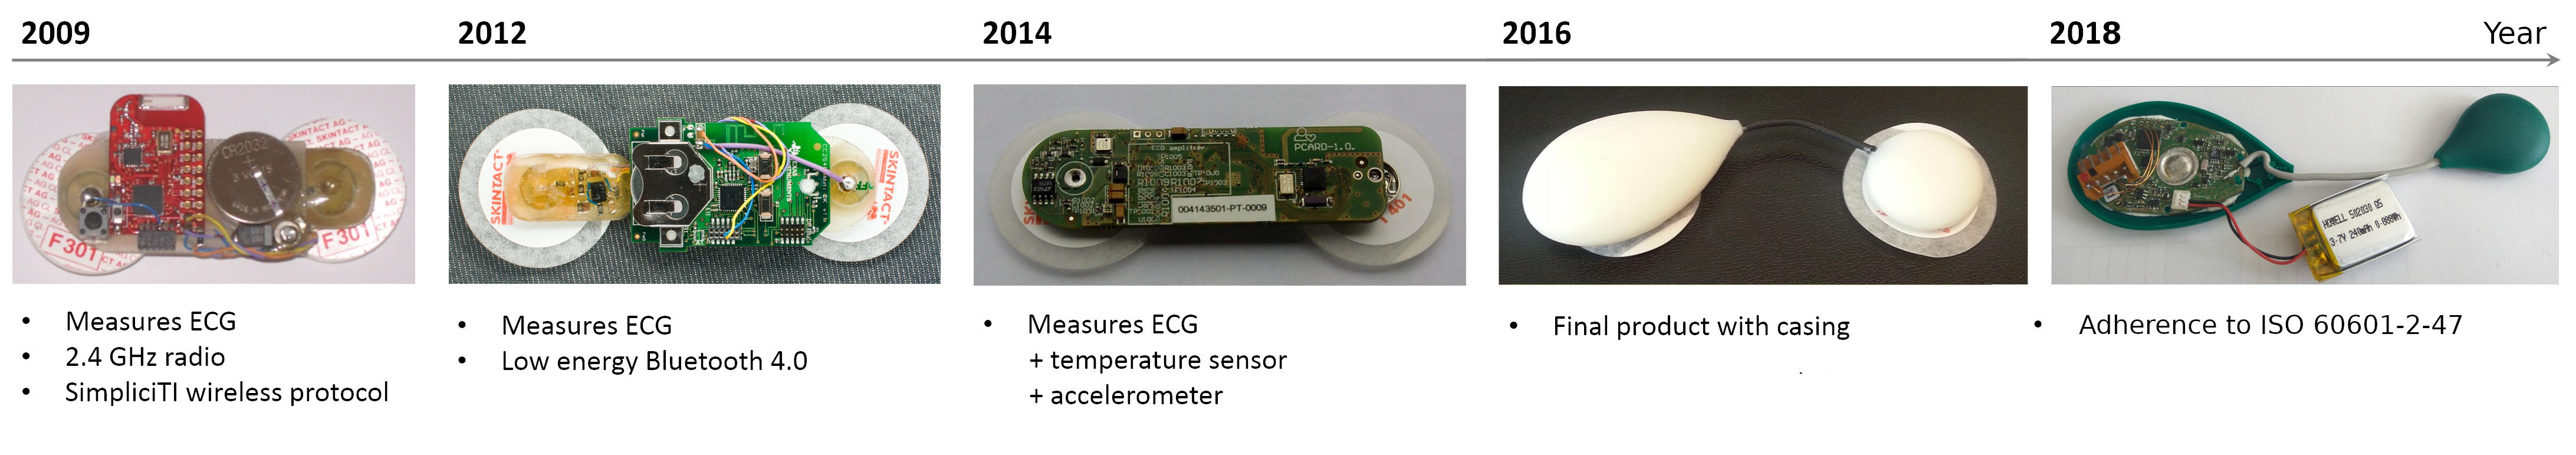 Evolution of the wearable sensor.